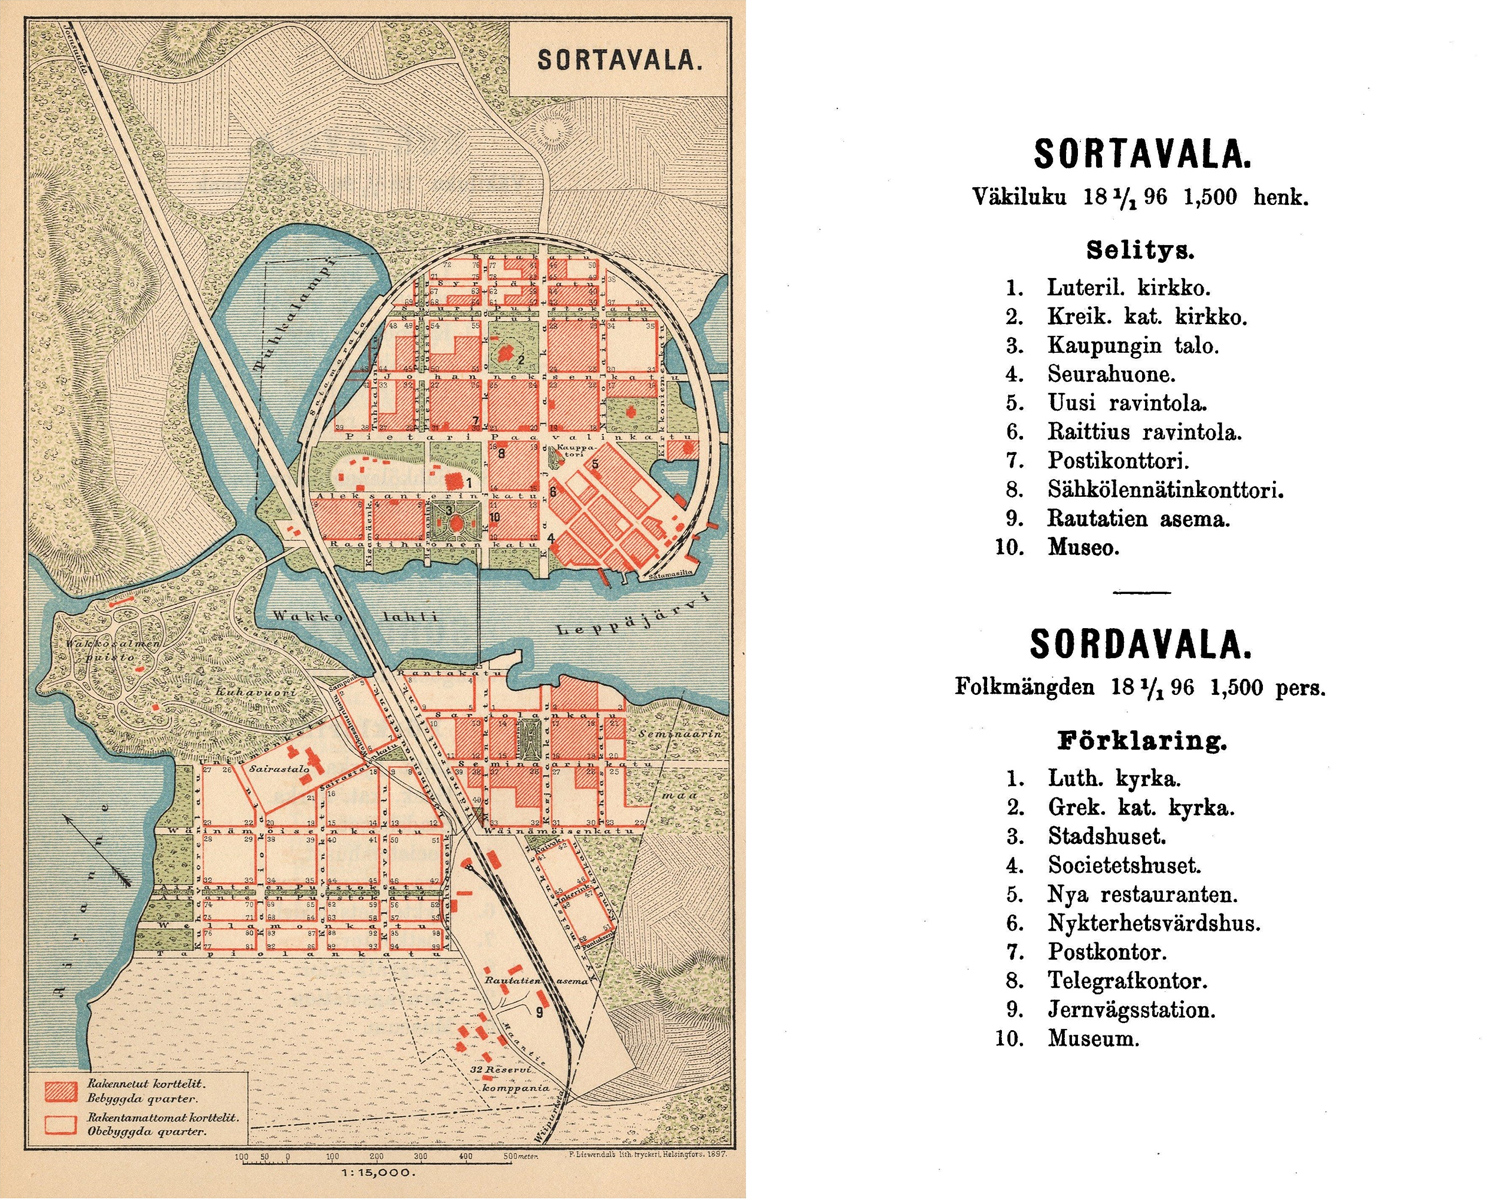 1897. Sortavala. Map, 1897